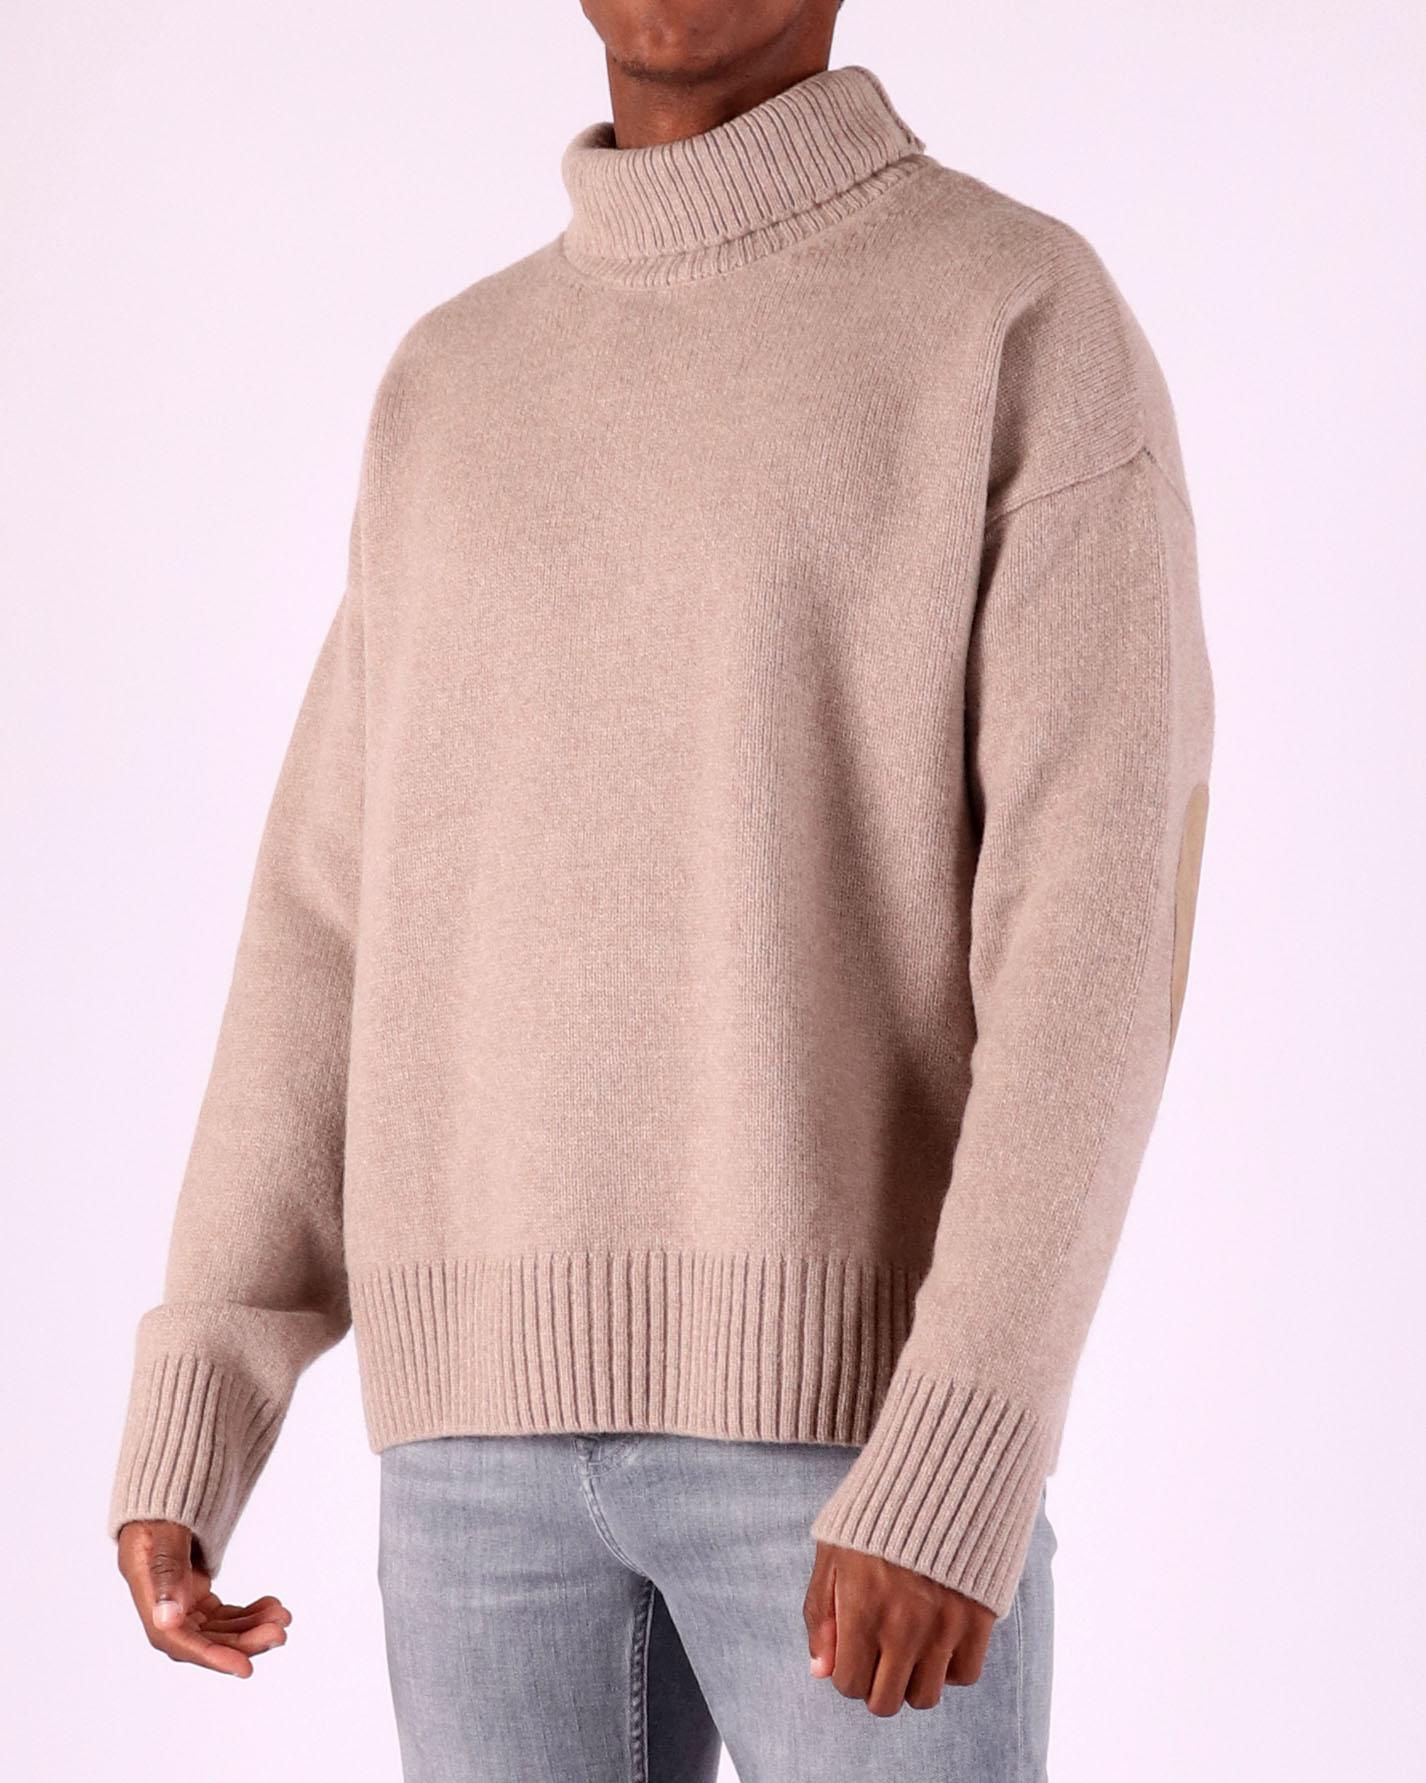 Ami sweater